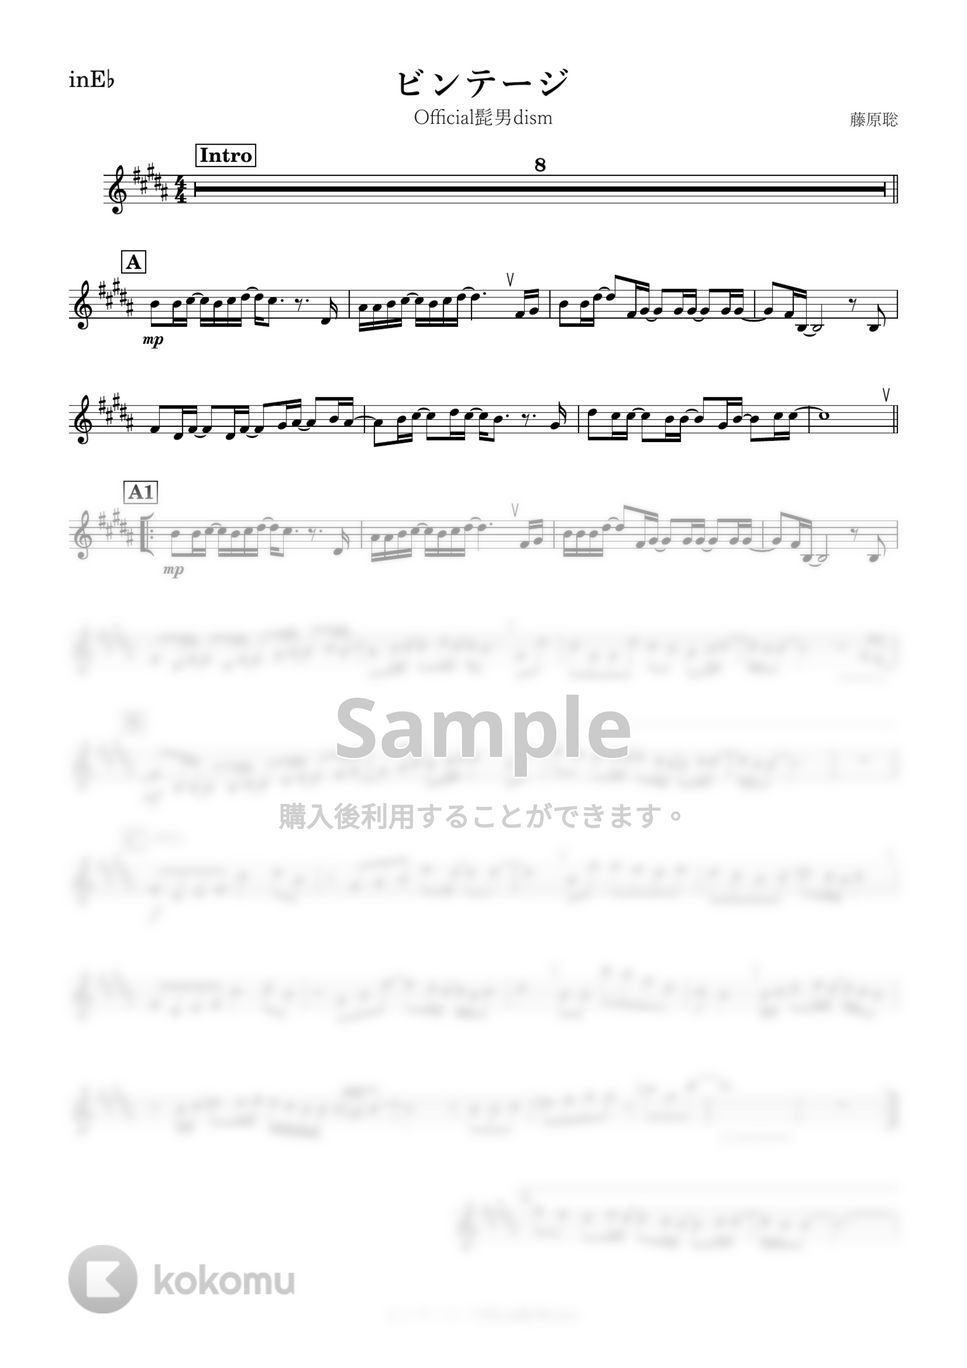 Official髭男dism - ビンテージ (E♭) by kanamusic